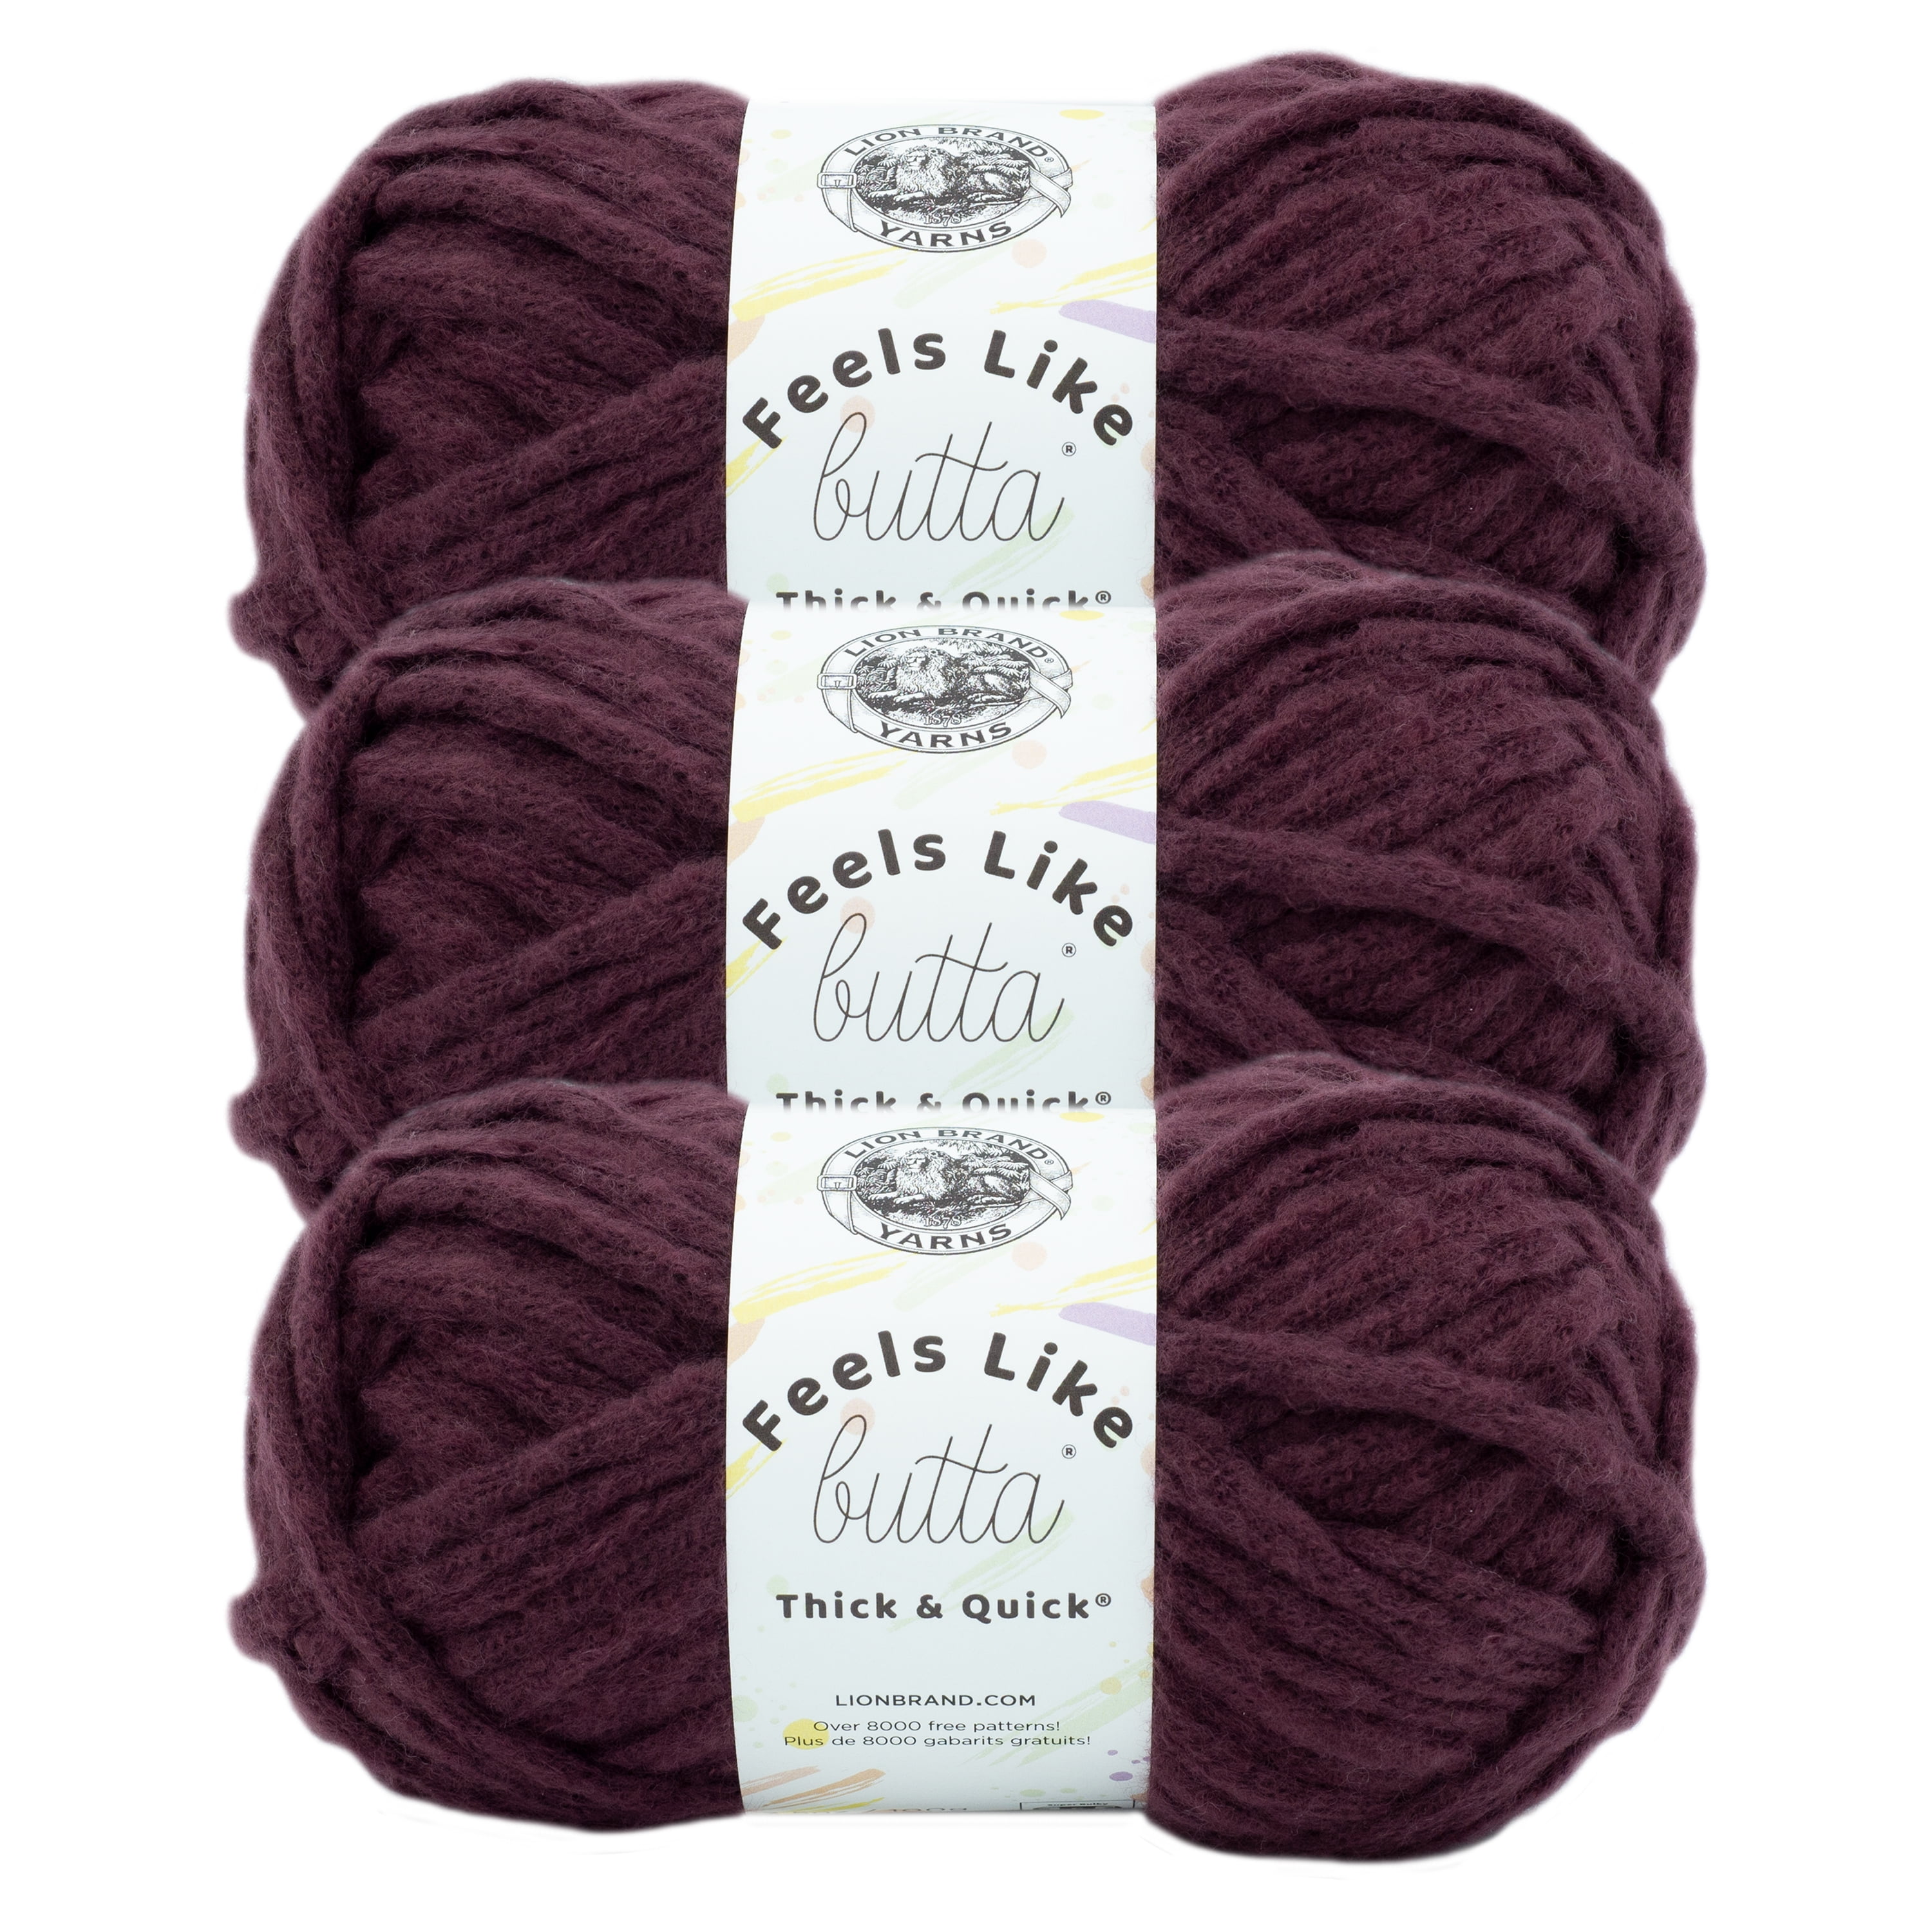 Lion Brand Yarn Feels Like Butta Thick & Quick Super Bulky Yarn for Knitting, 3 Pack, Peach Blush